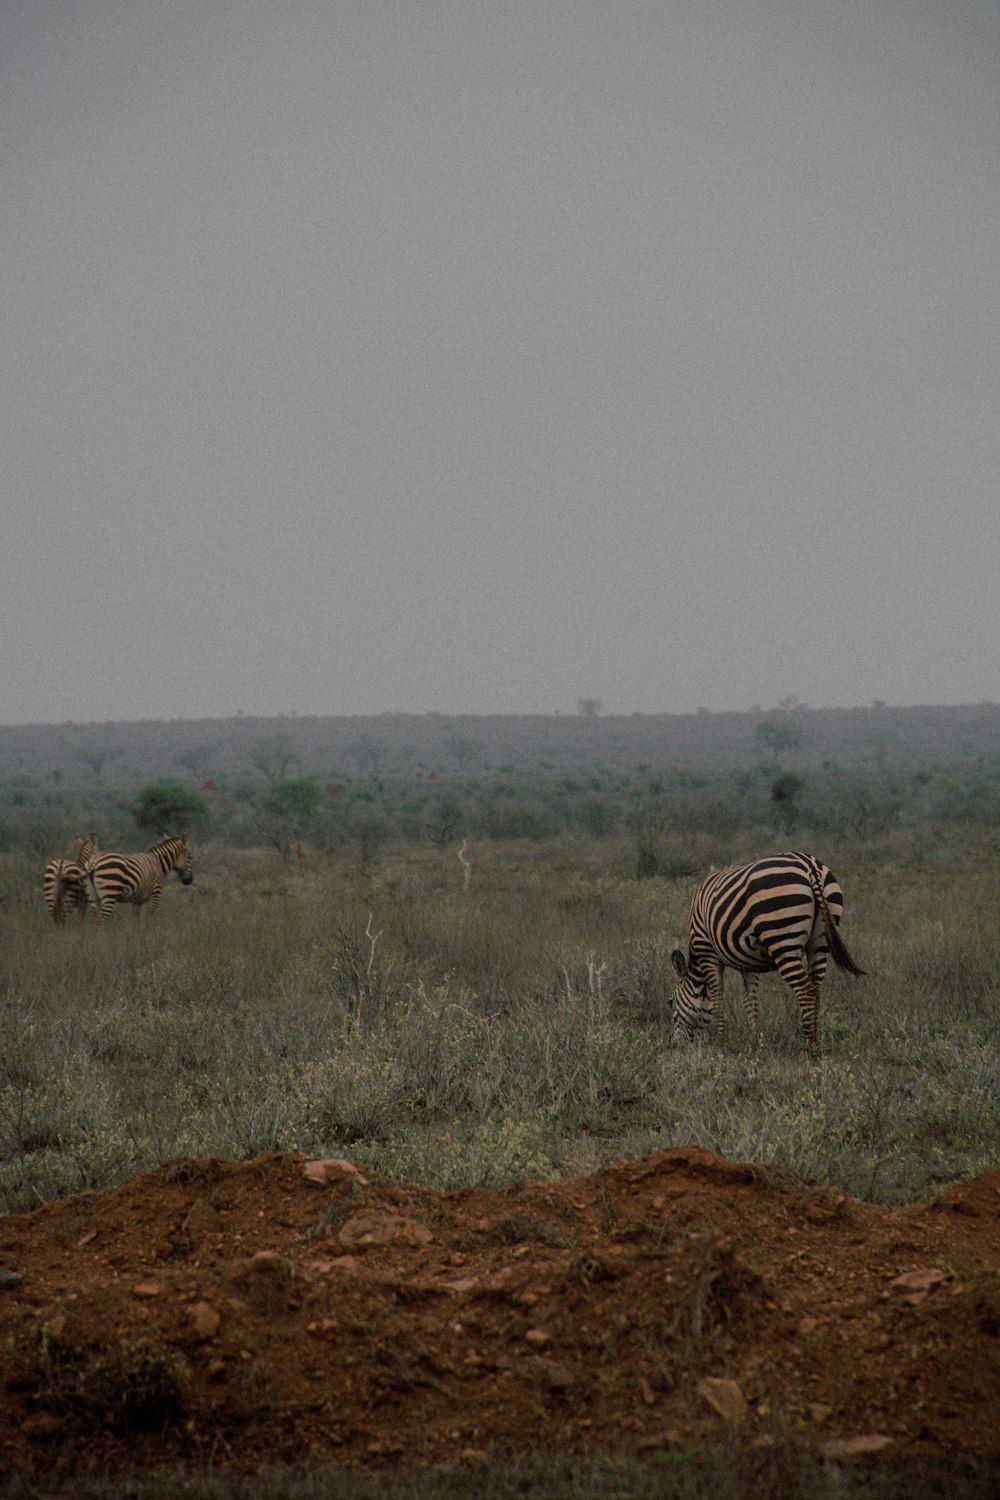 zebras grazing in the grass